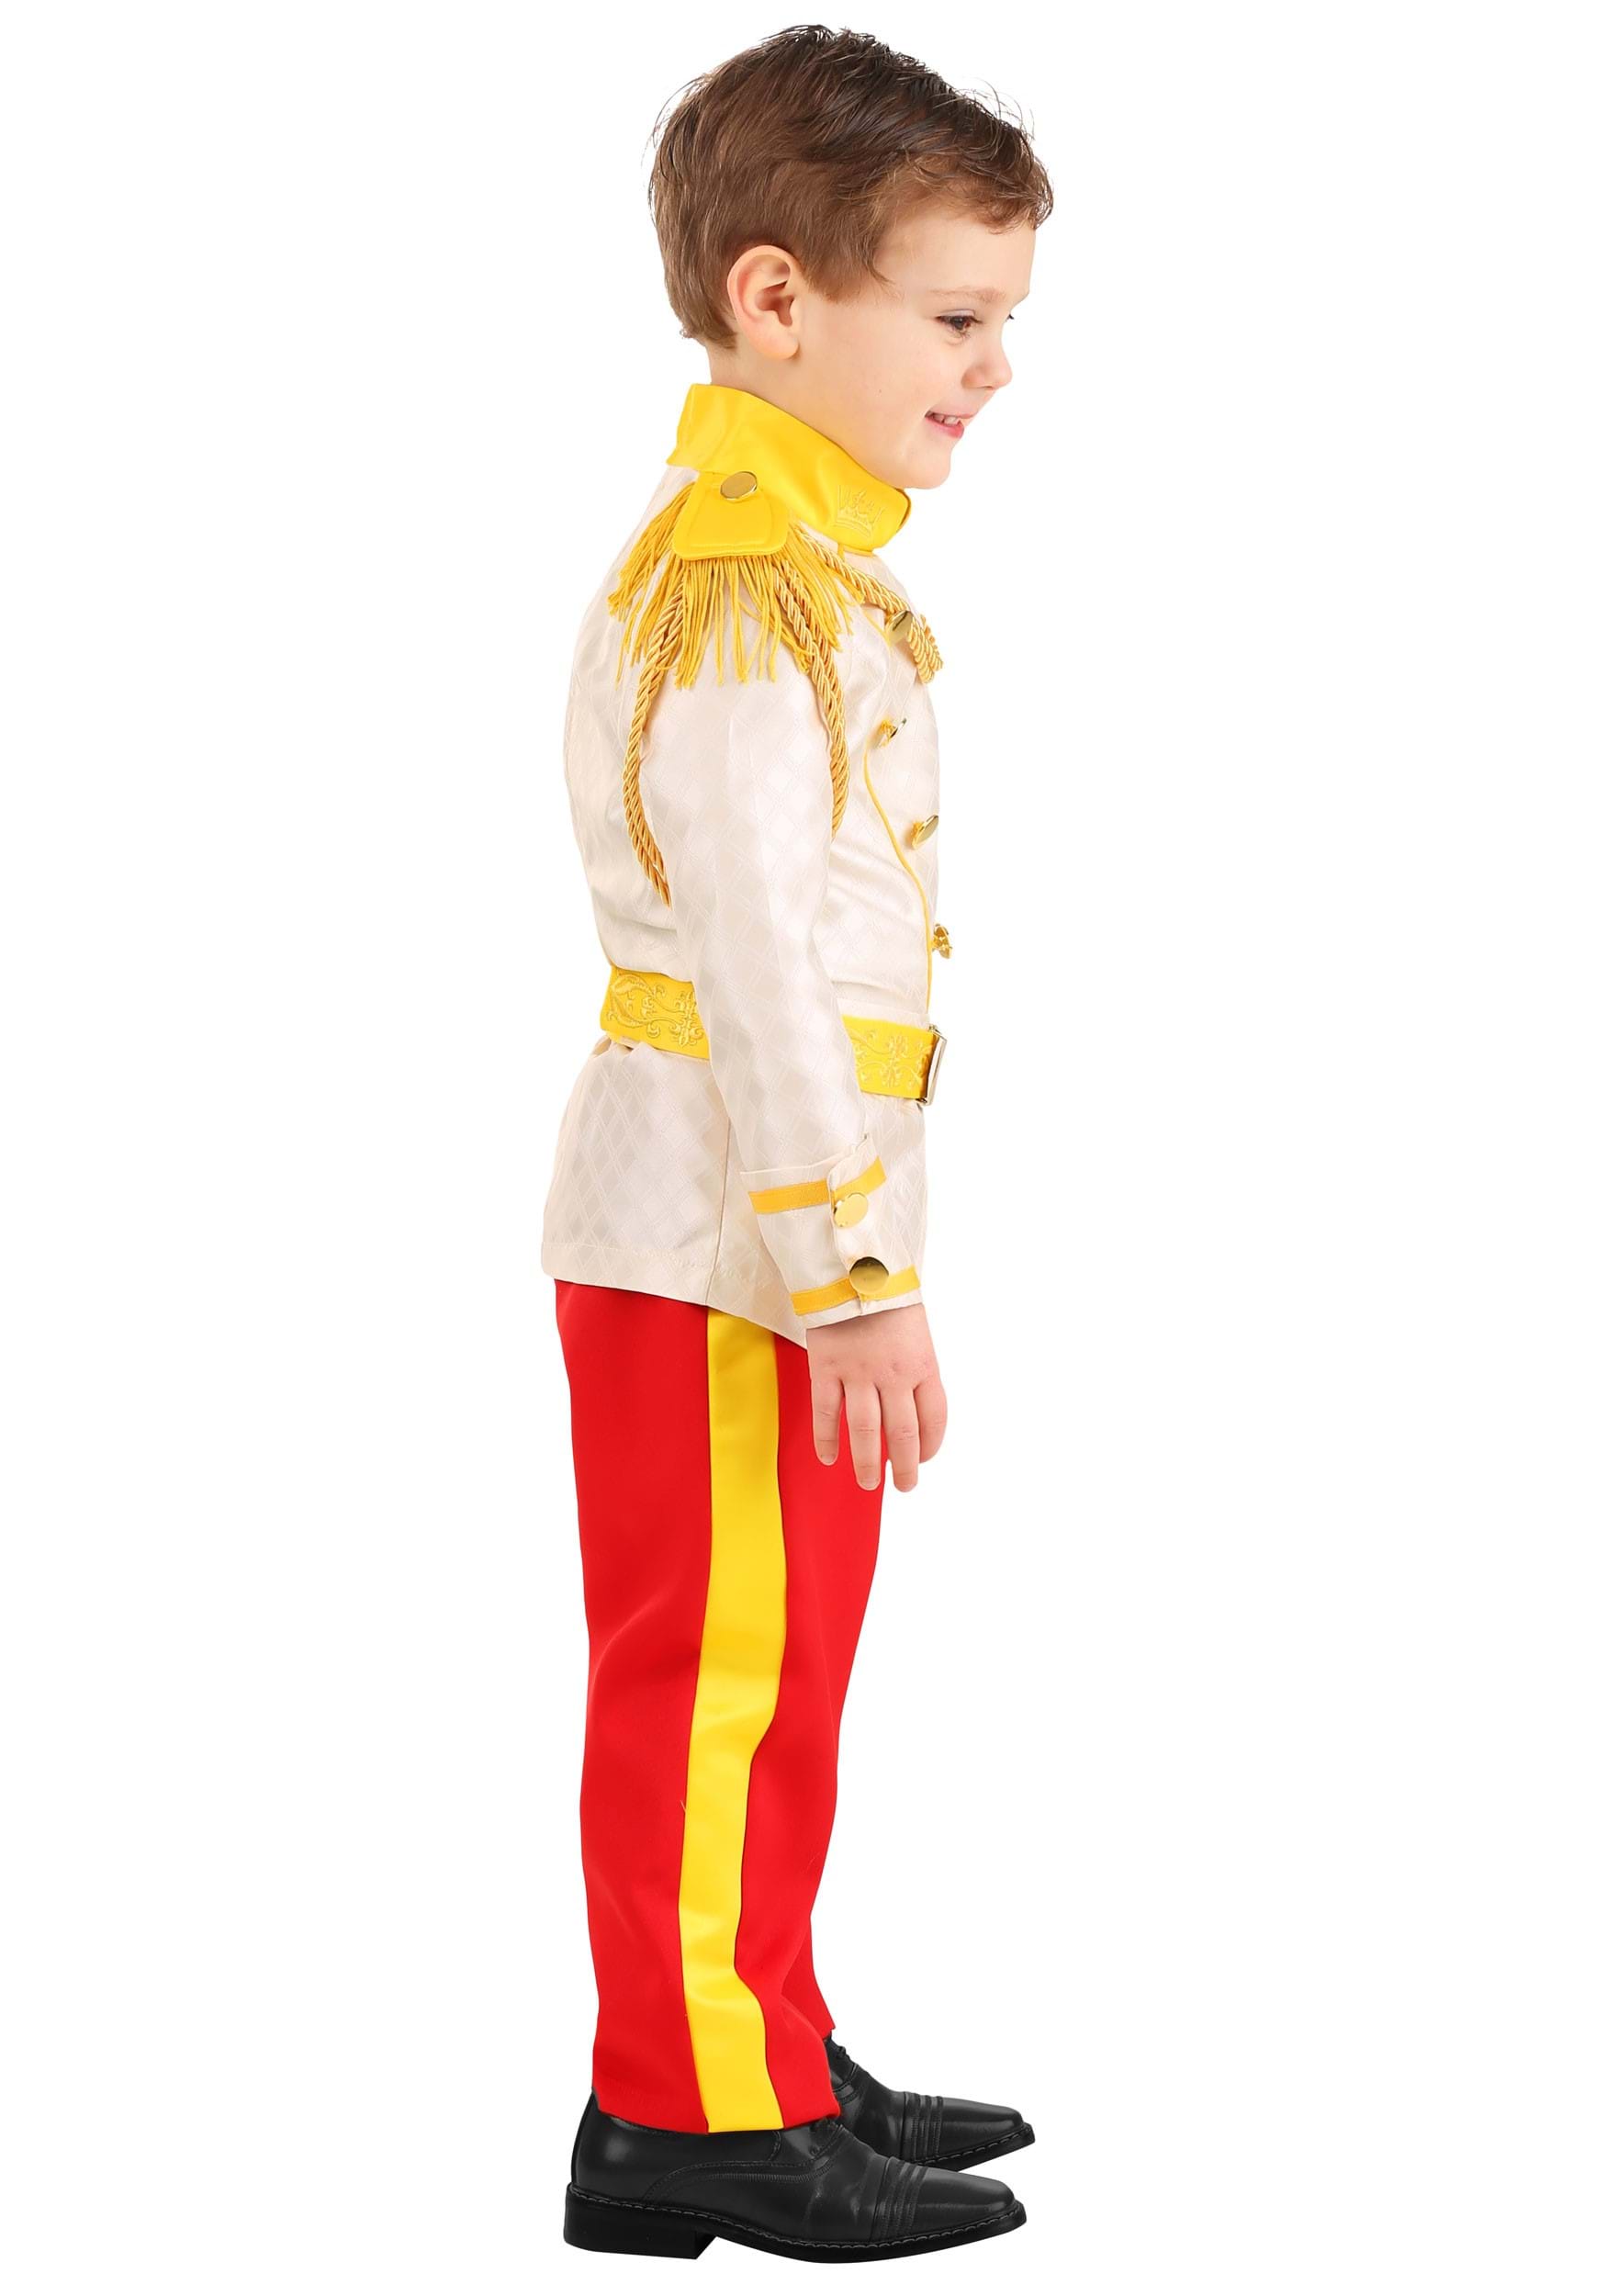 Cinderella Prince Charming Toddler Costume